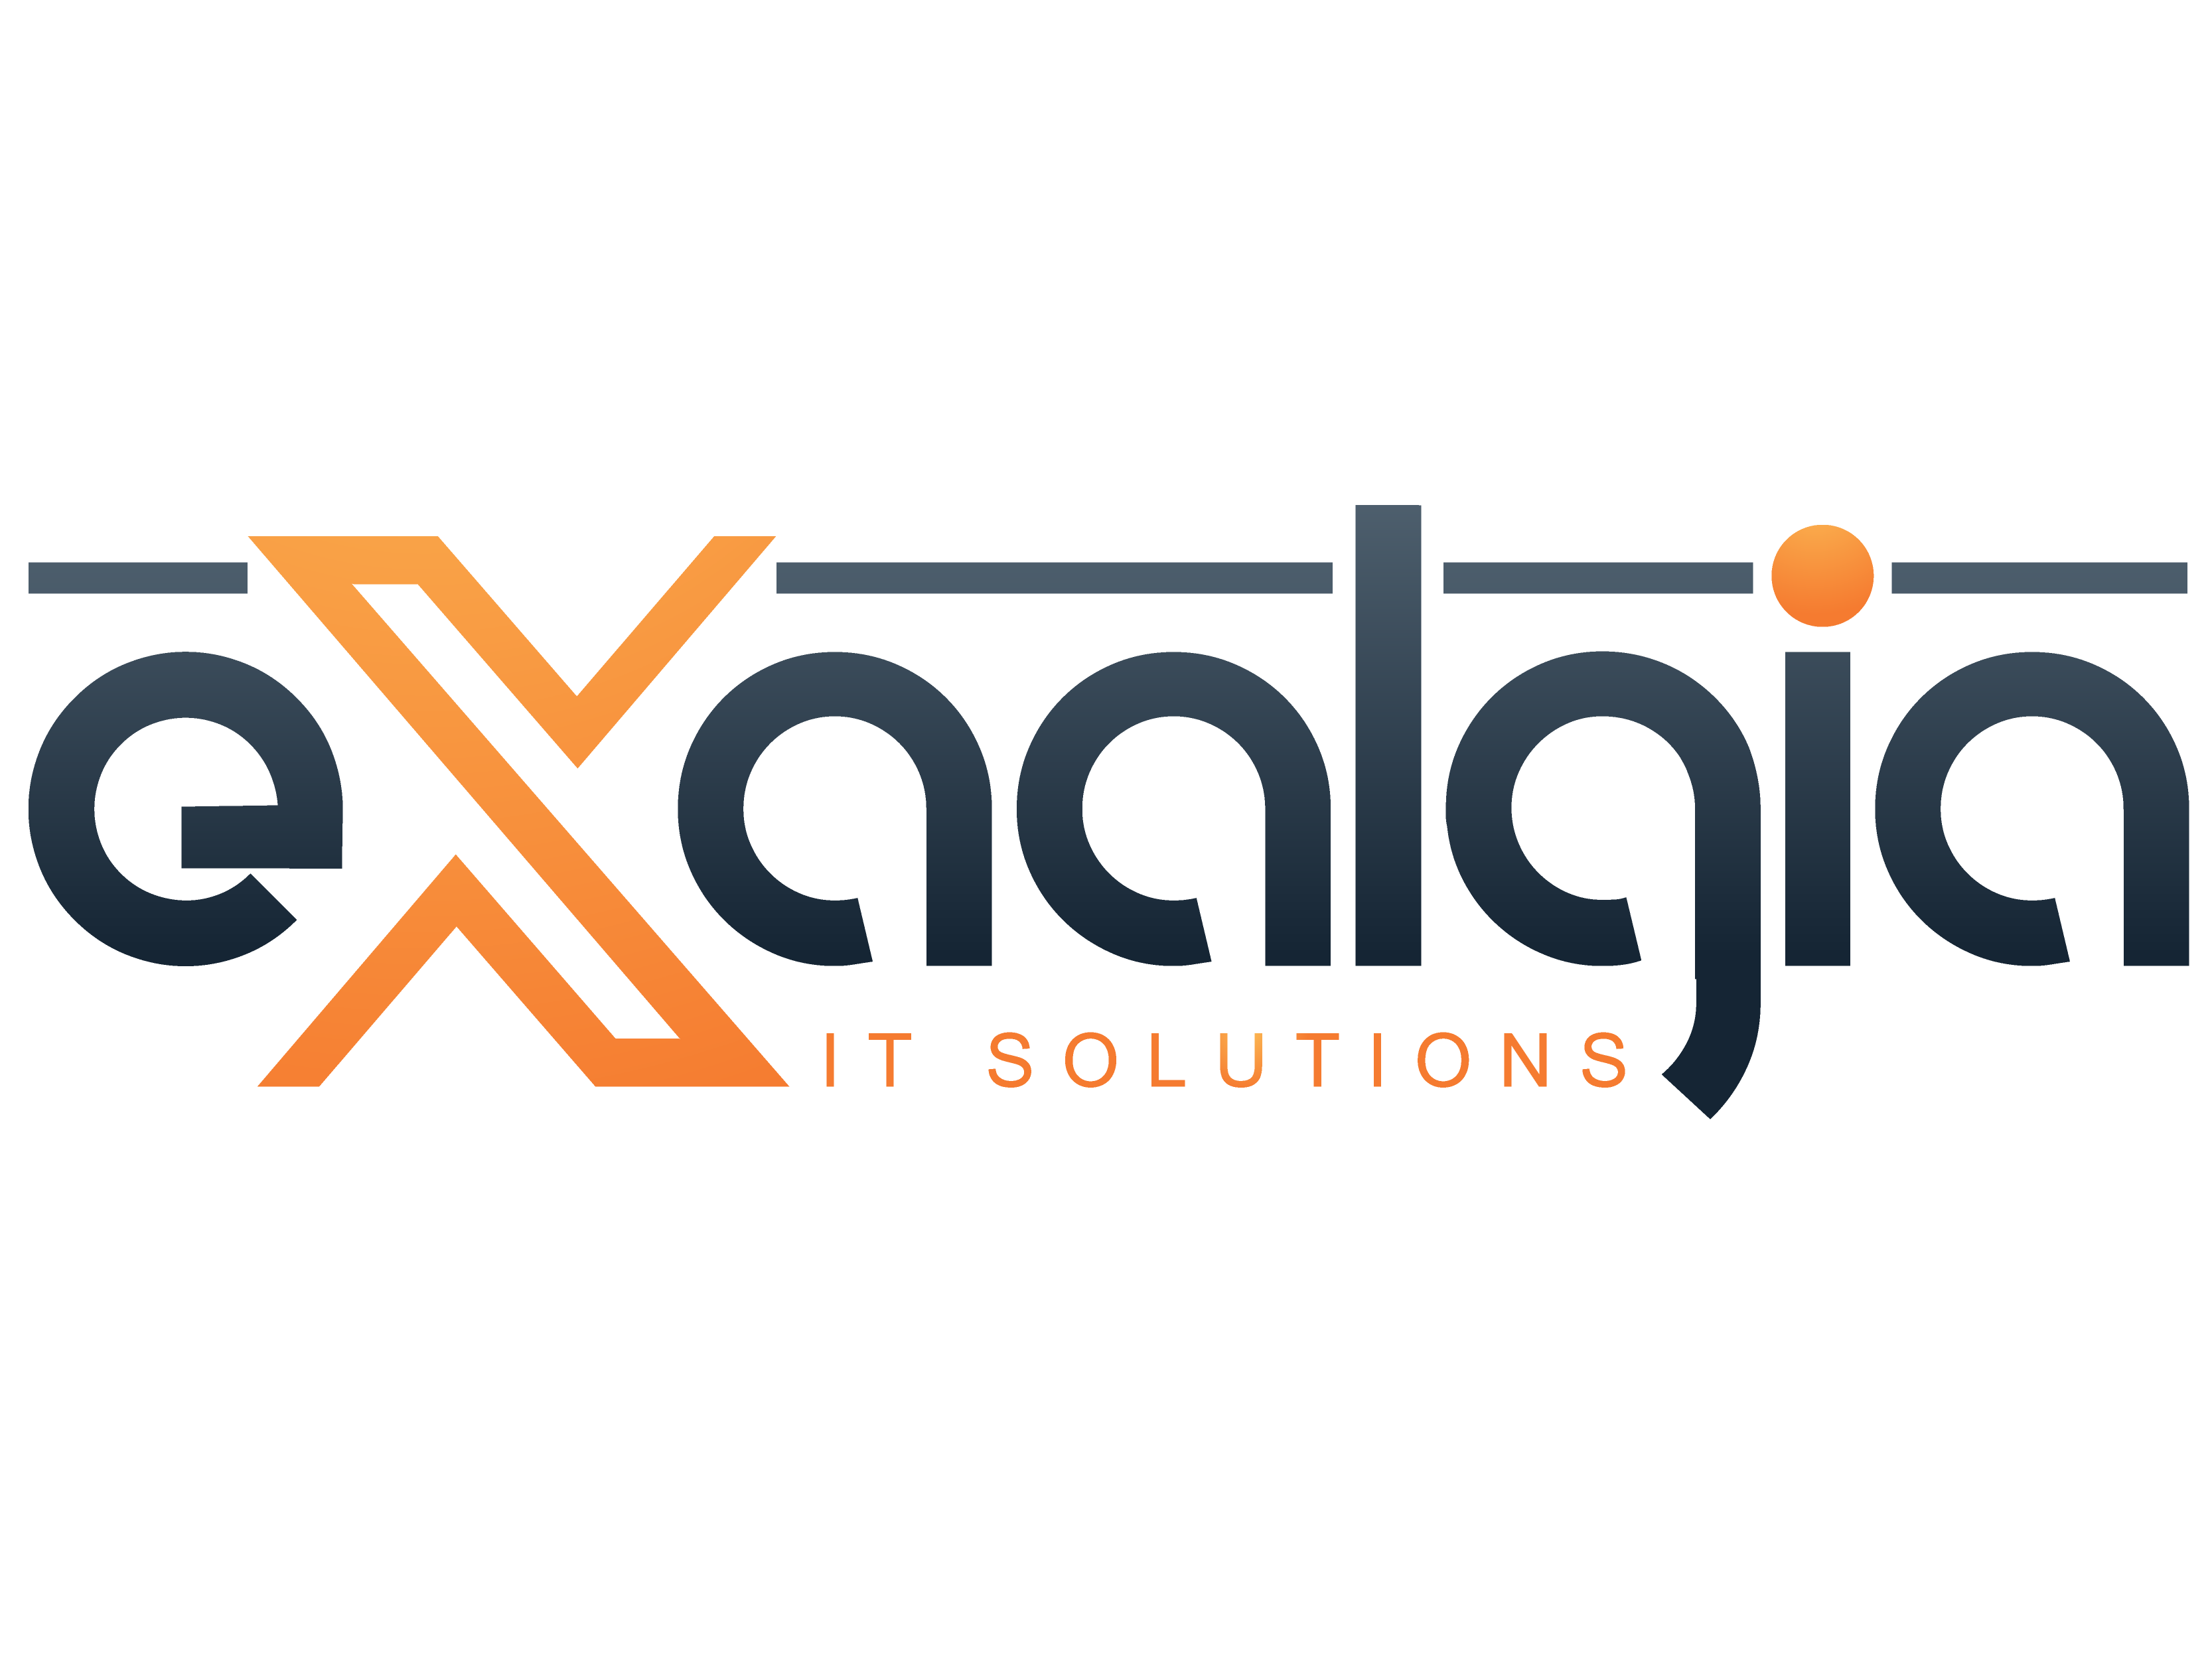 Best Online Marketing Company Logo: Exaalgia